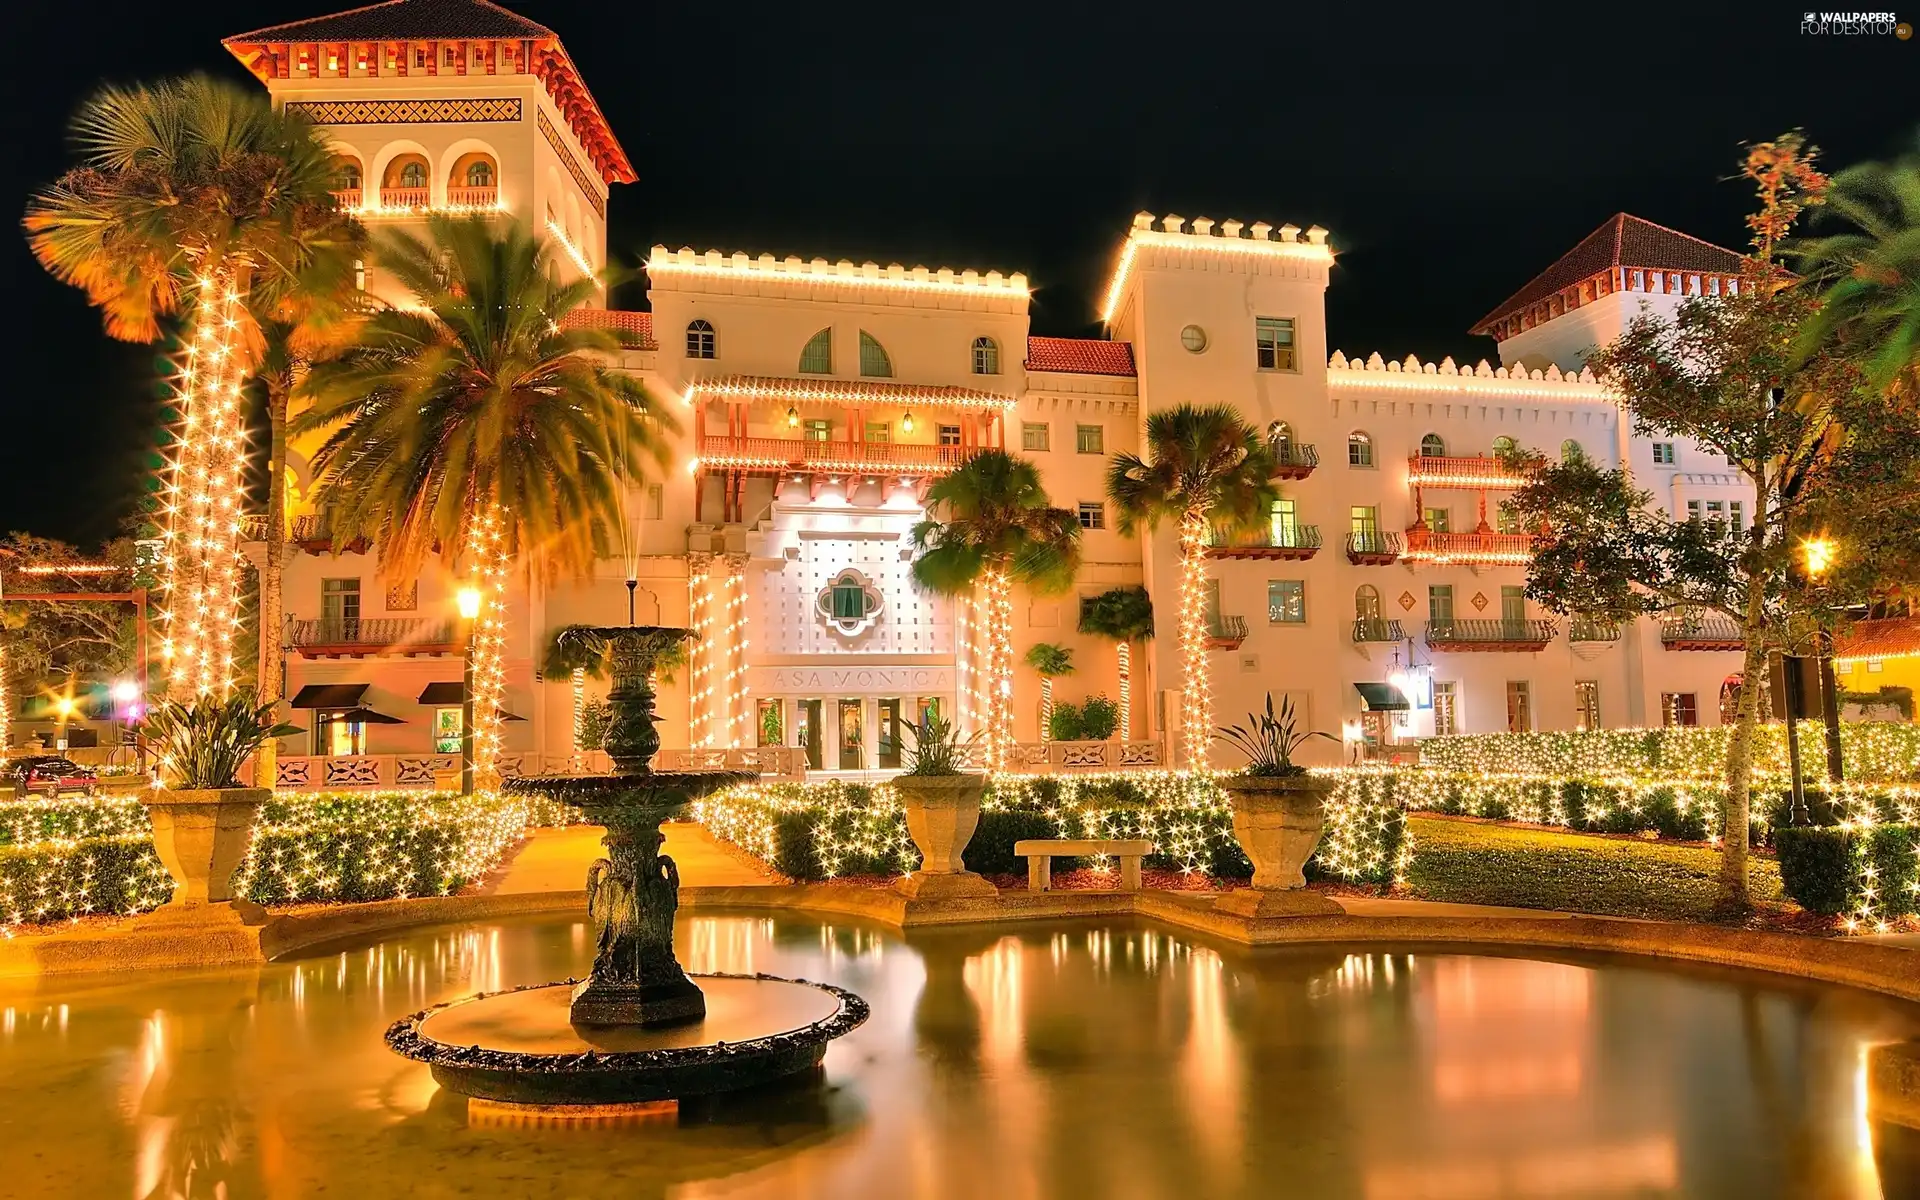 Hotel hall, Palms, lights, fountain